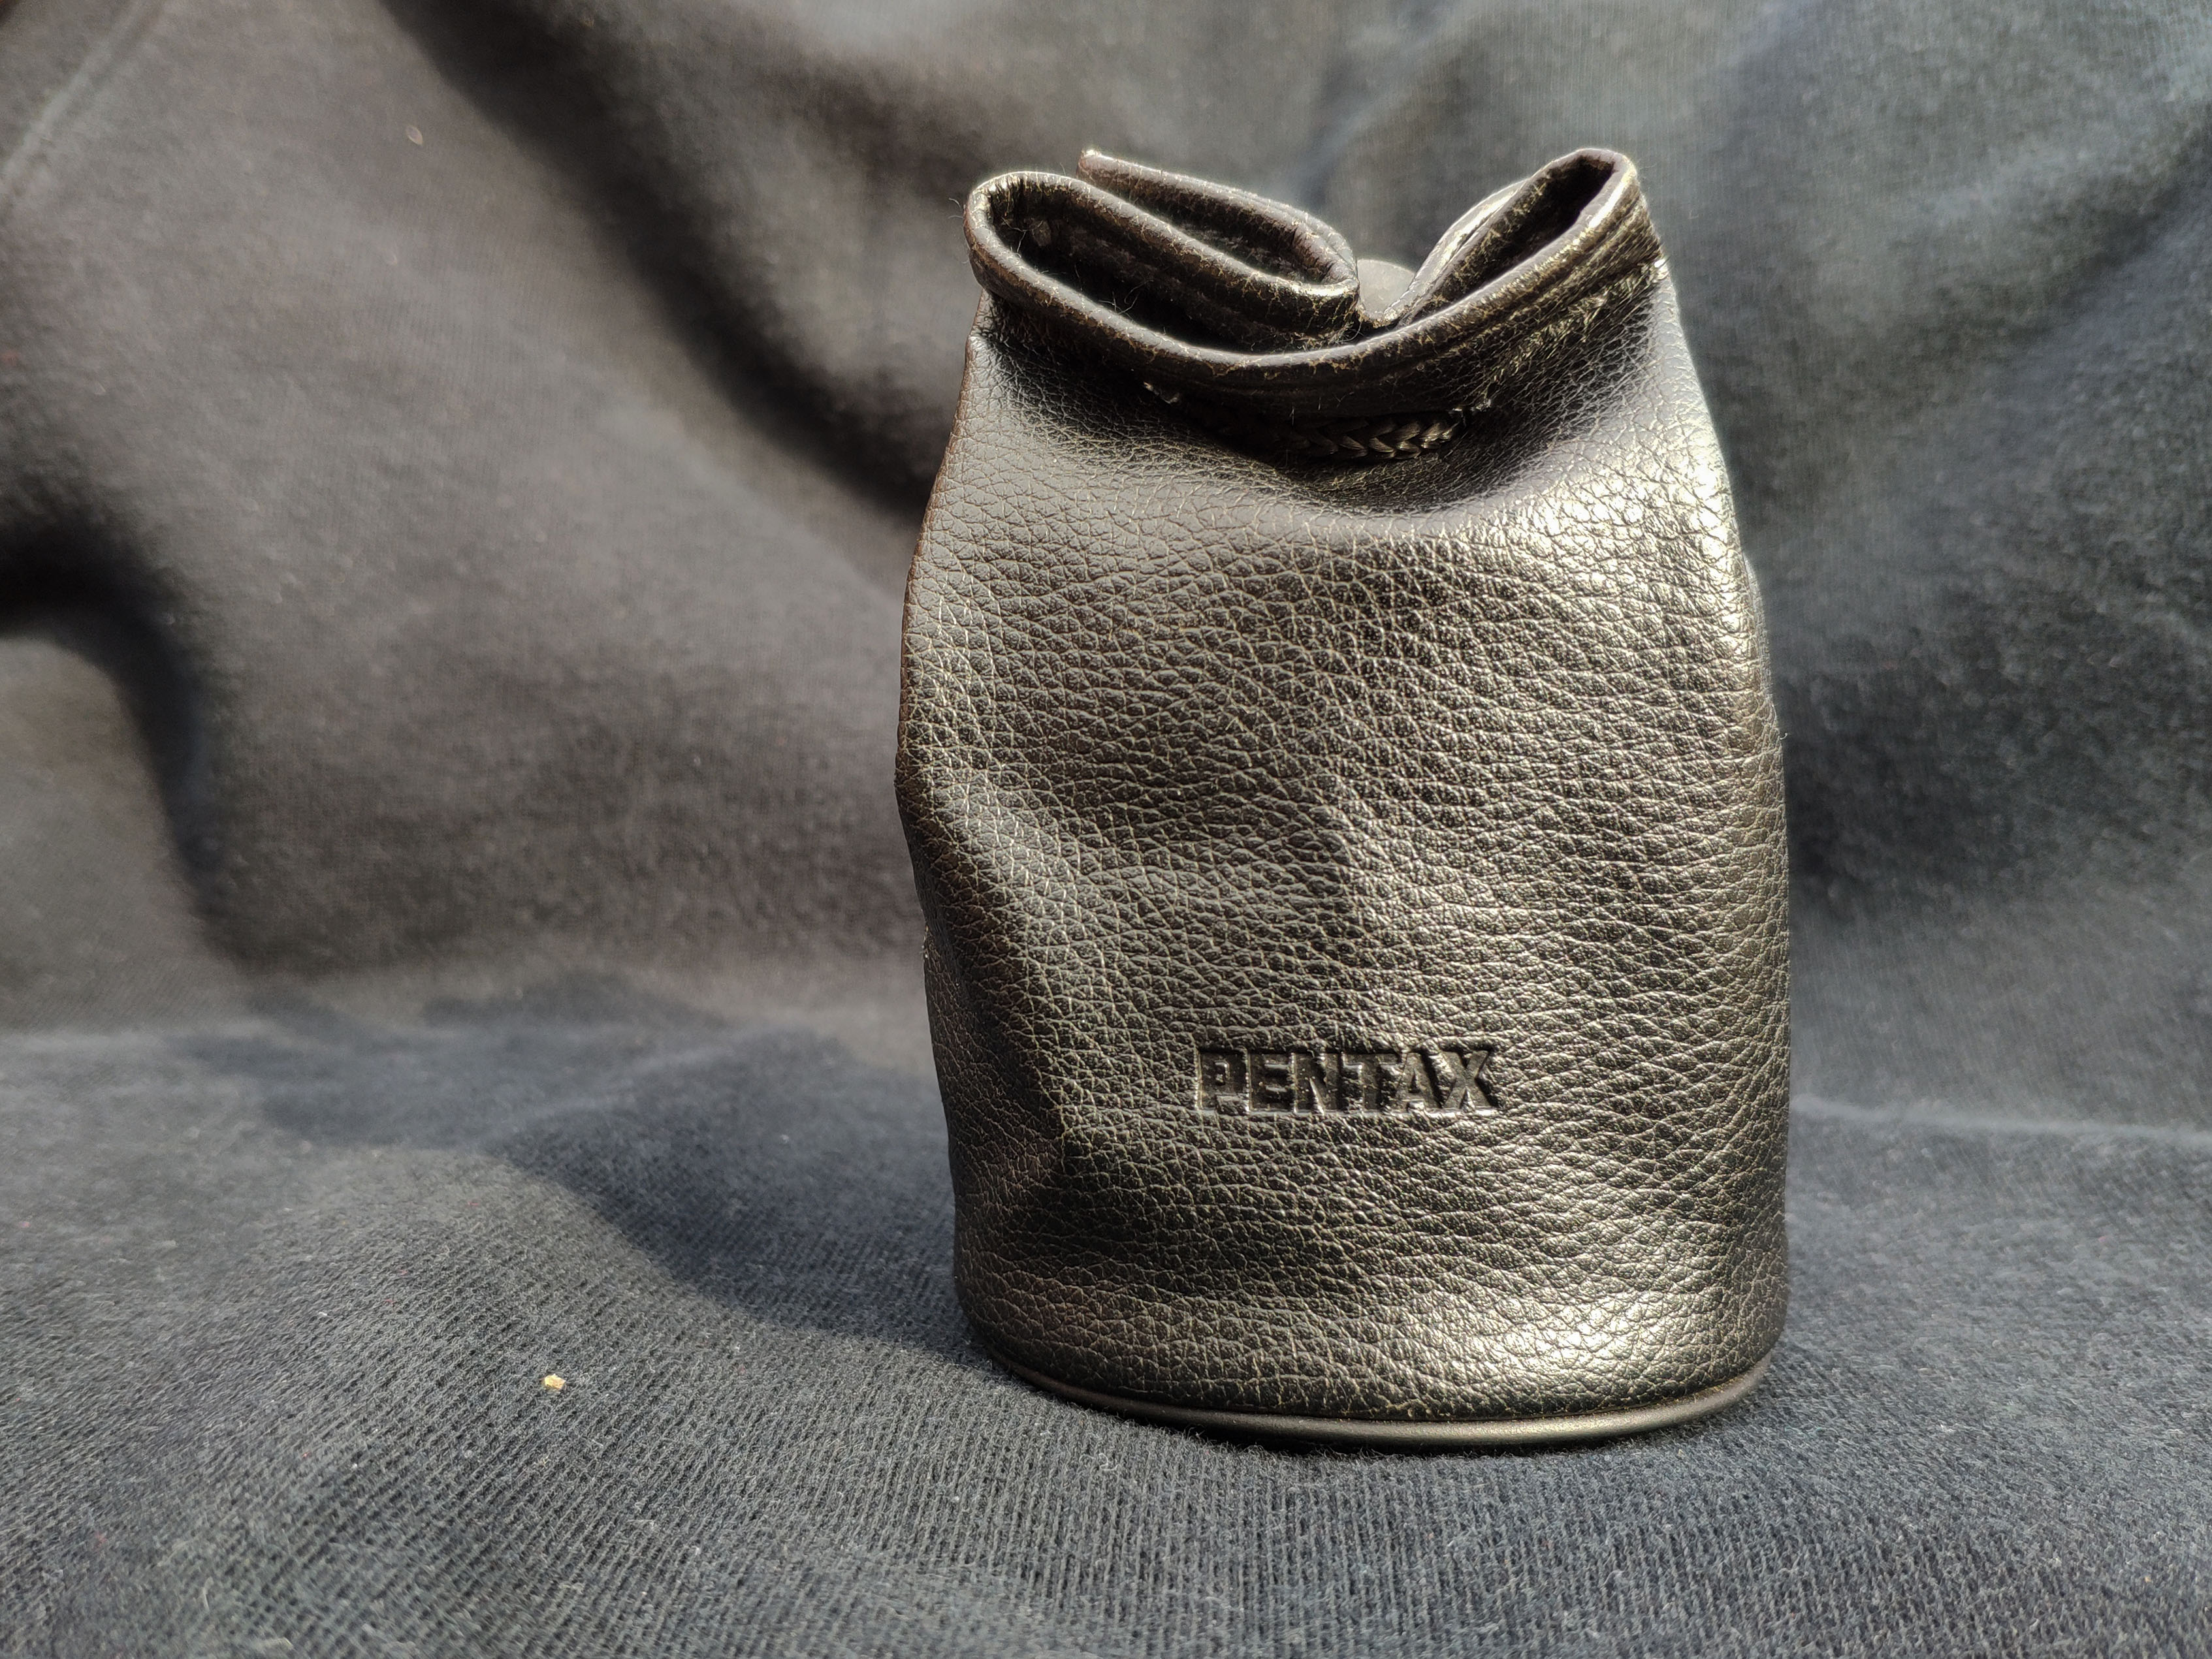  Pentax DA 70mm f/2.4 Limited